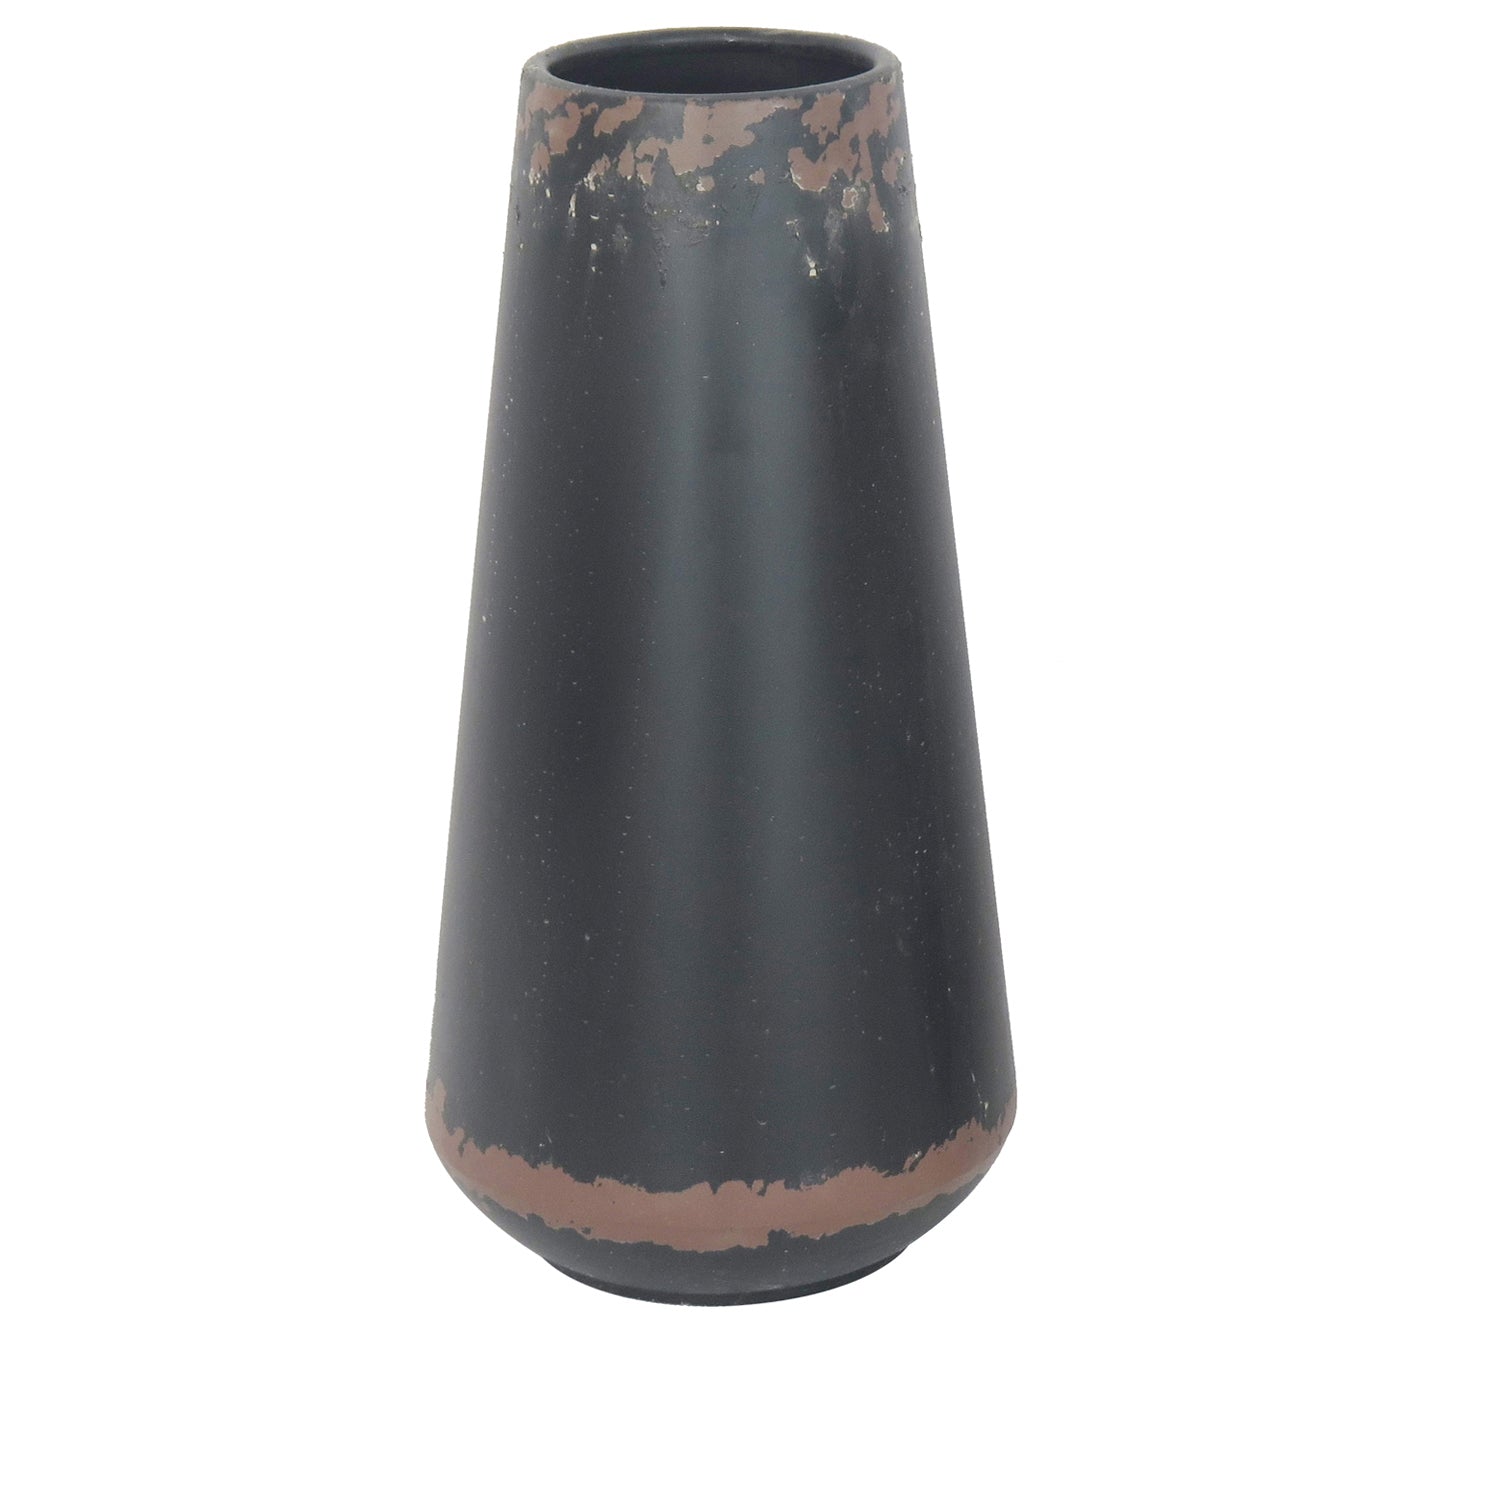 Crestview Collection Vase 1 8" x 16" Rustic Metal Vase In Rustic Black Finish